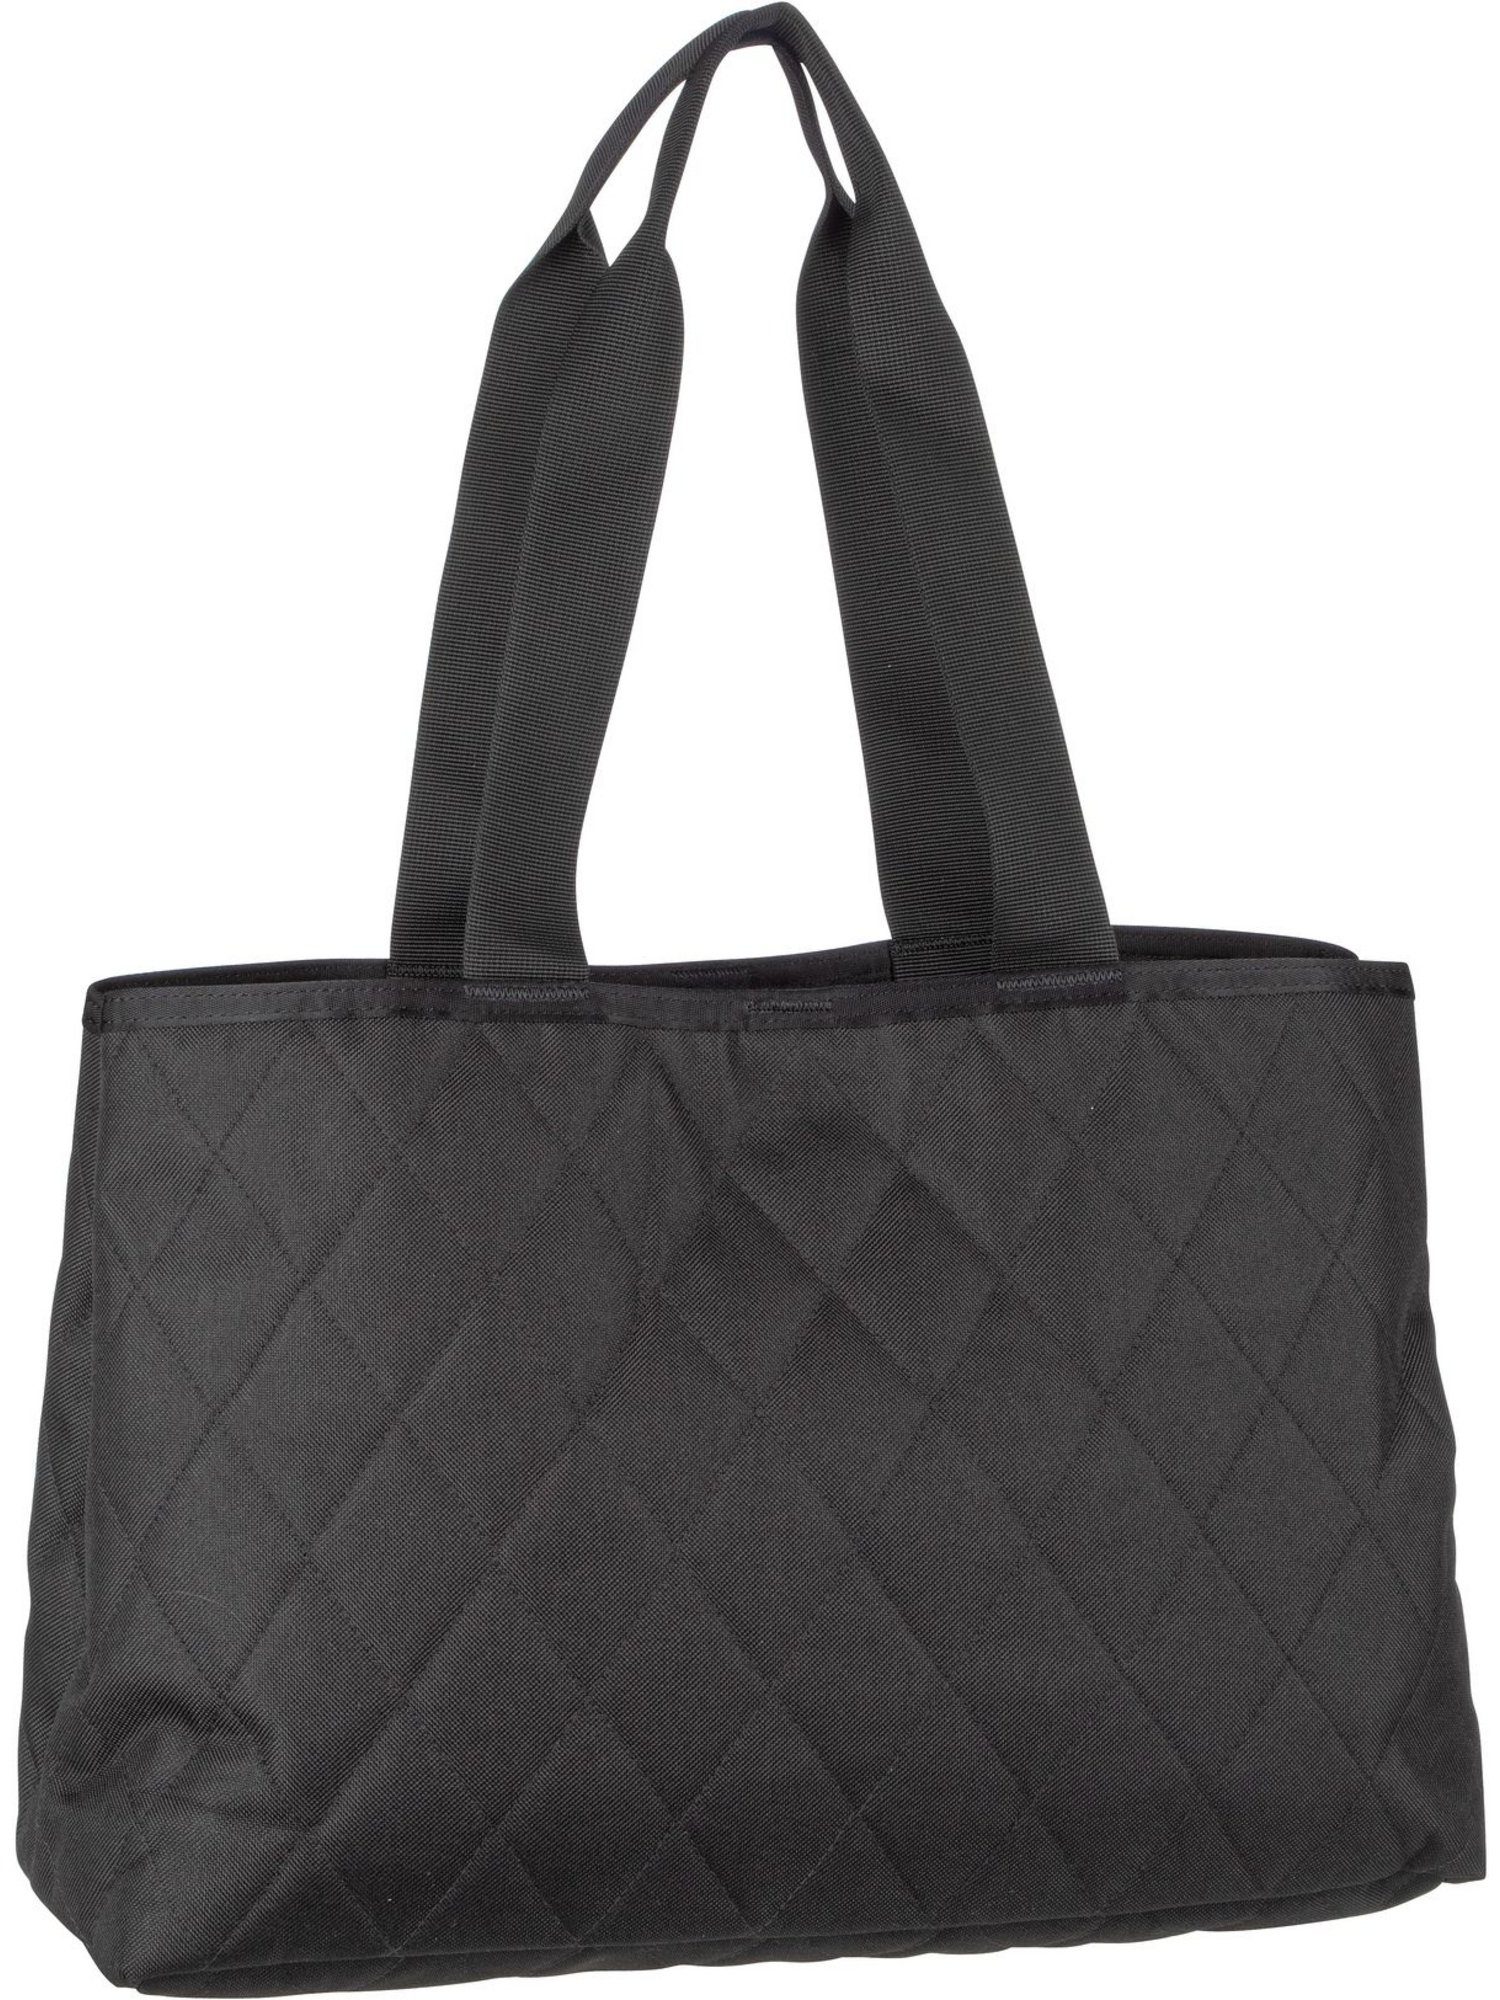 REISENTHEL® Handtasche classic shopper L, Rhombus Black Shopper